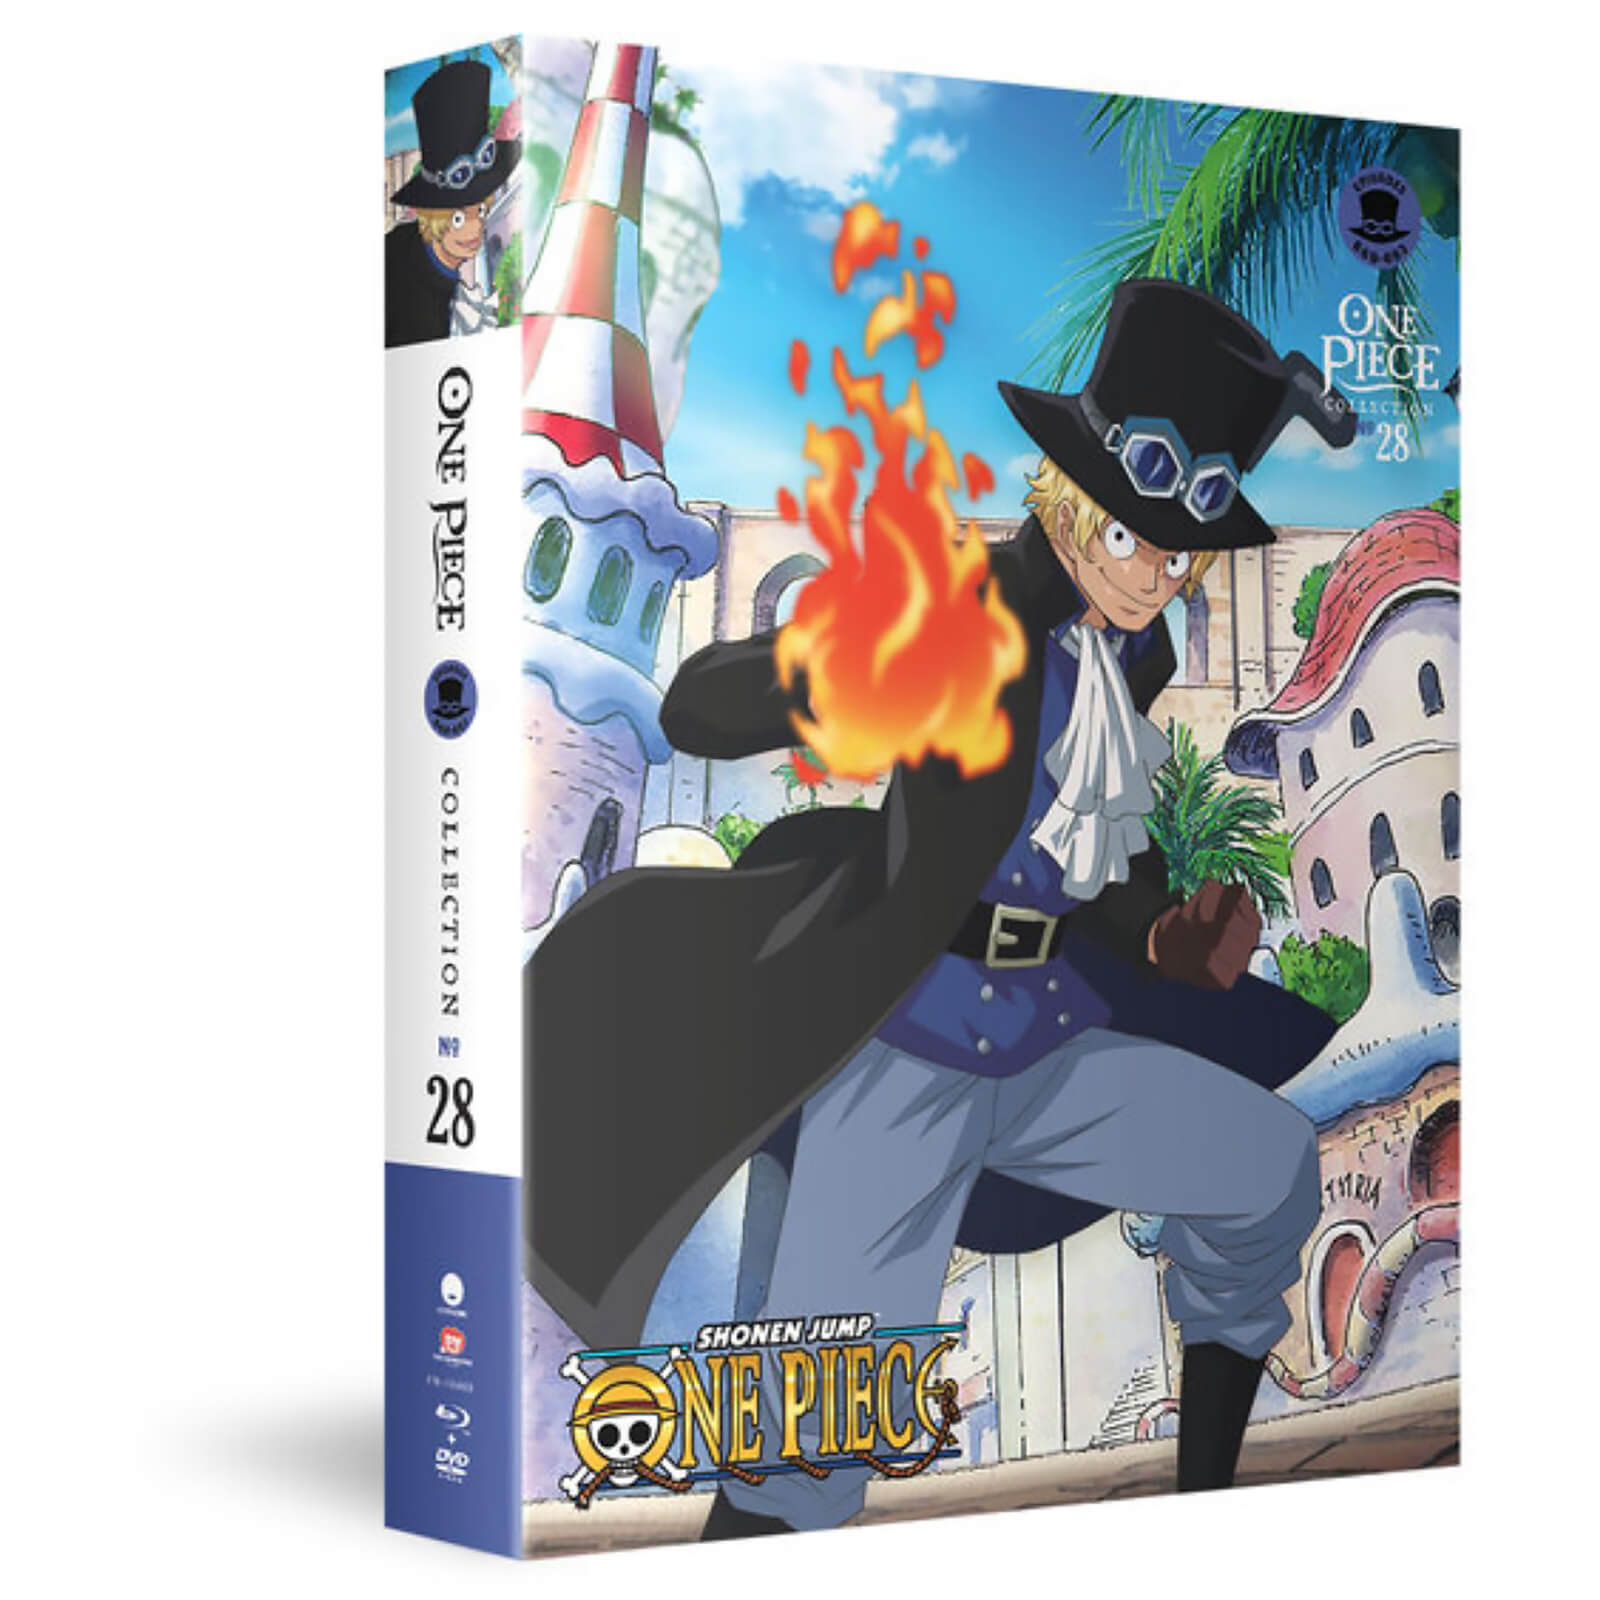 One Piece: Collection 28 (Includes DVD) (US Import) von Crunchyroll